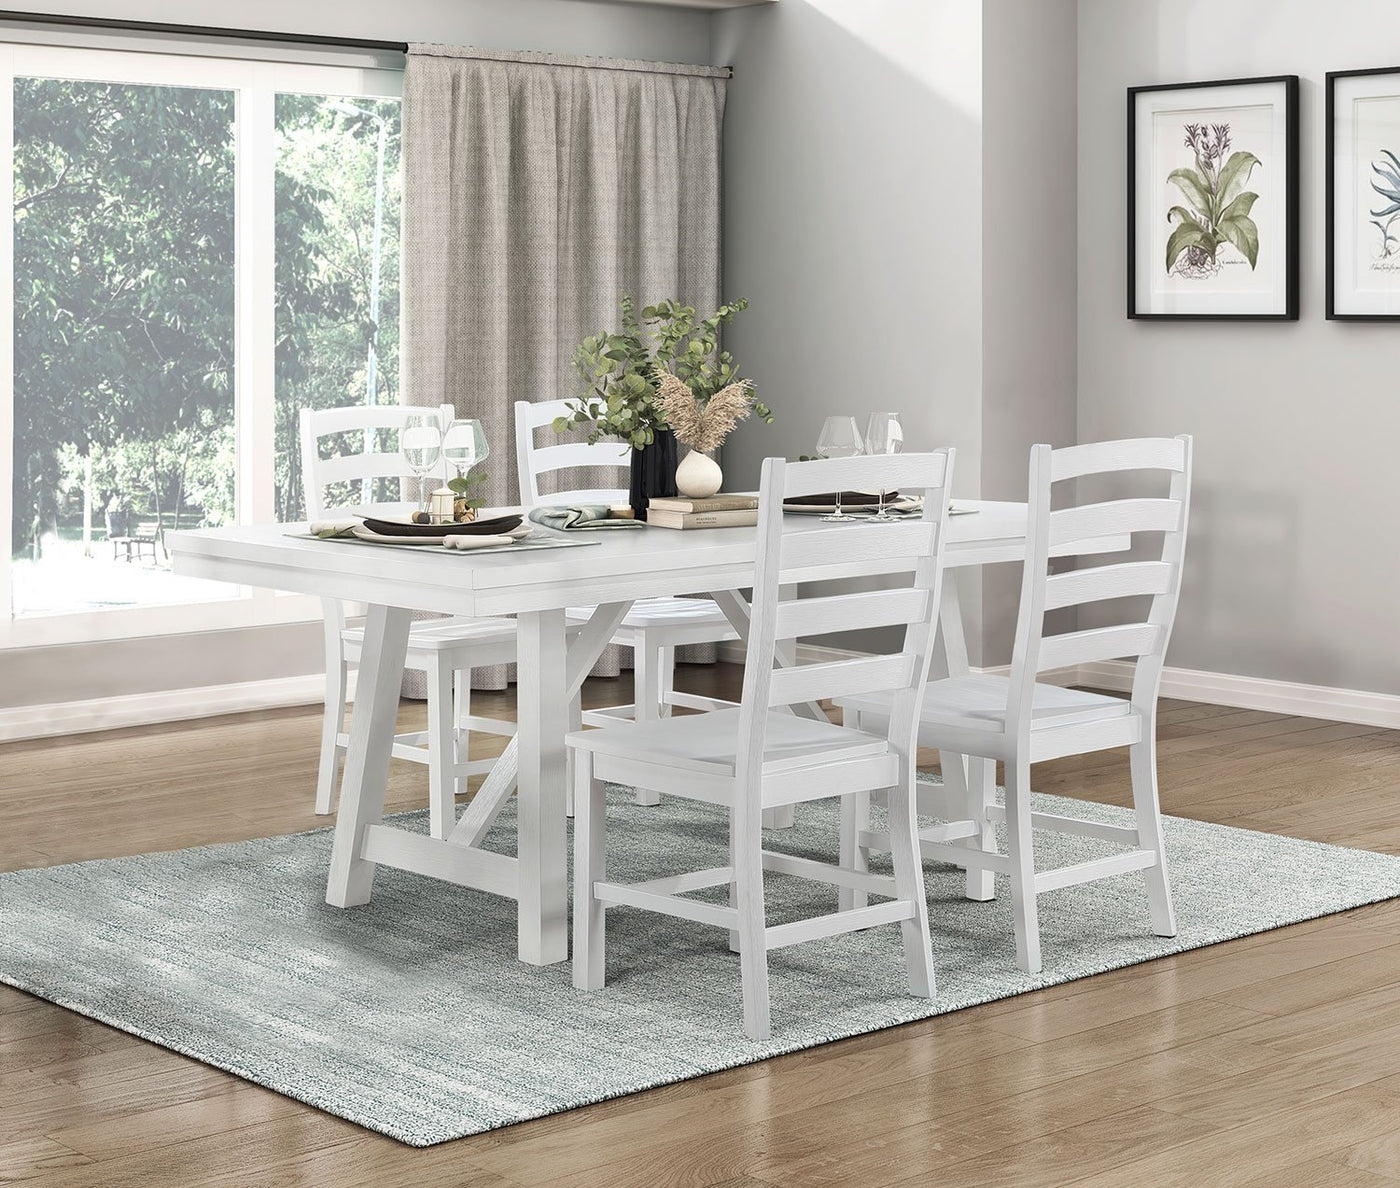 Vivid Dining Chair - White